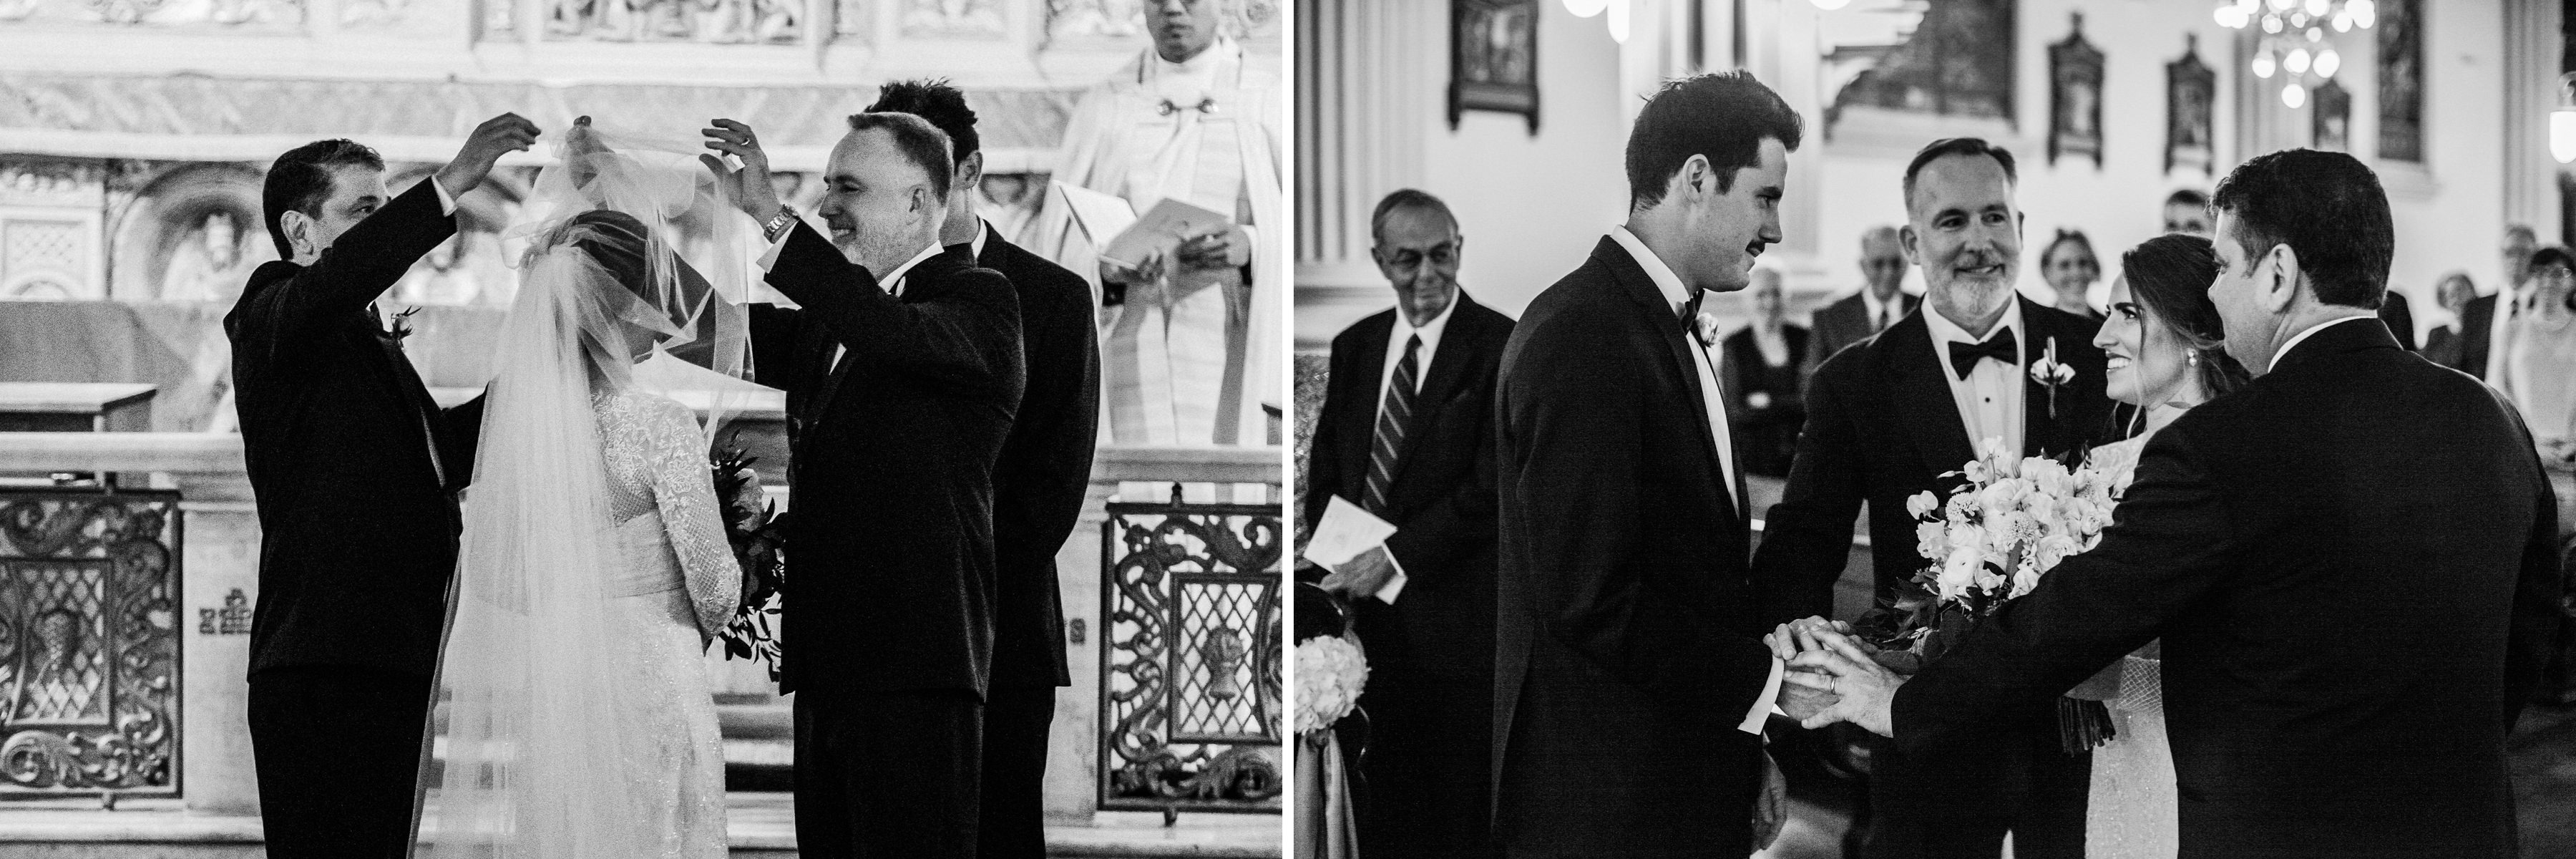 MULLET_WEDDING_NEW_ORLEANS_LOUISIANA_WEDDING_PHOTOGRAPHY_111